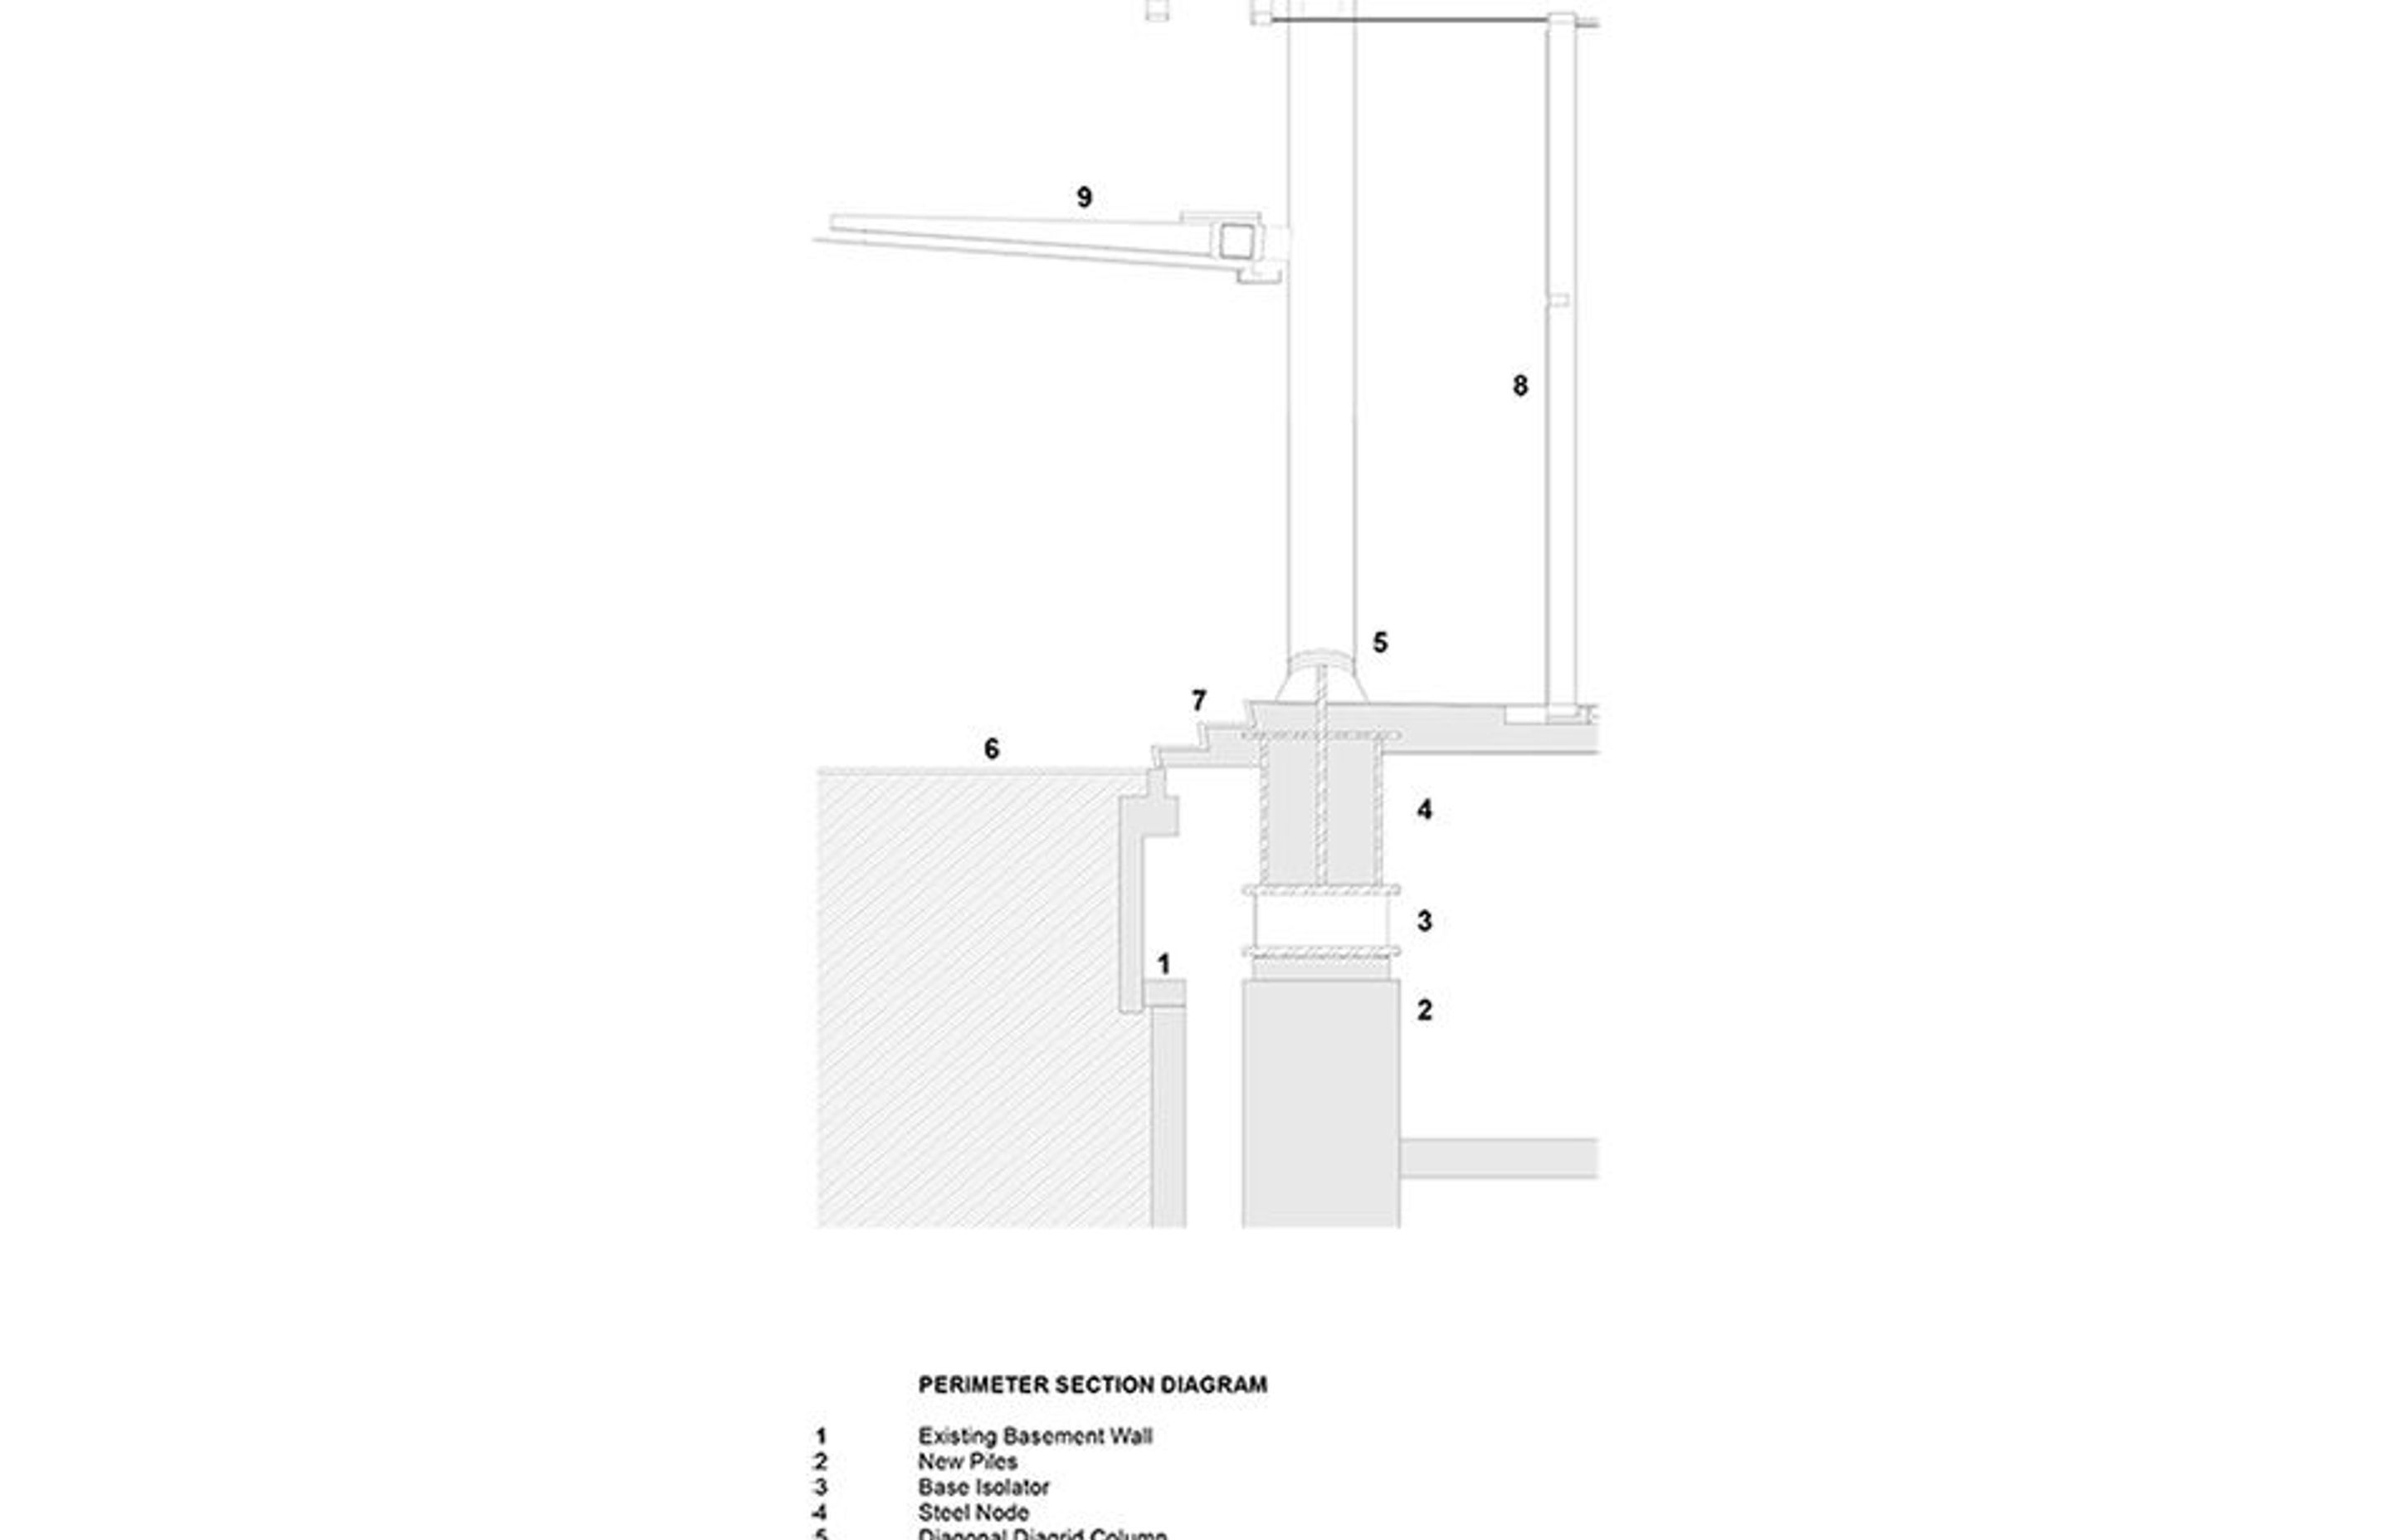 The perimeter section diagram by Studio Pacific Architecture.